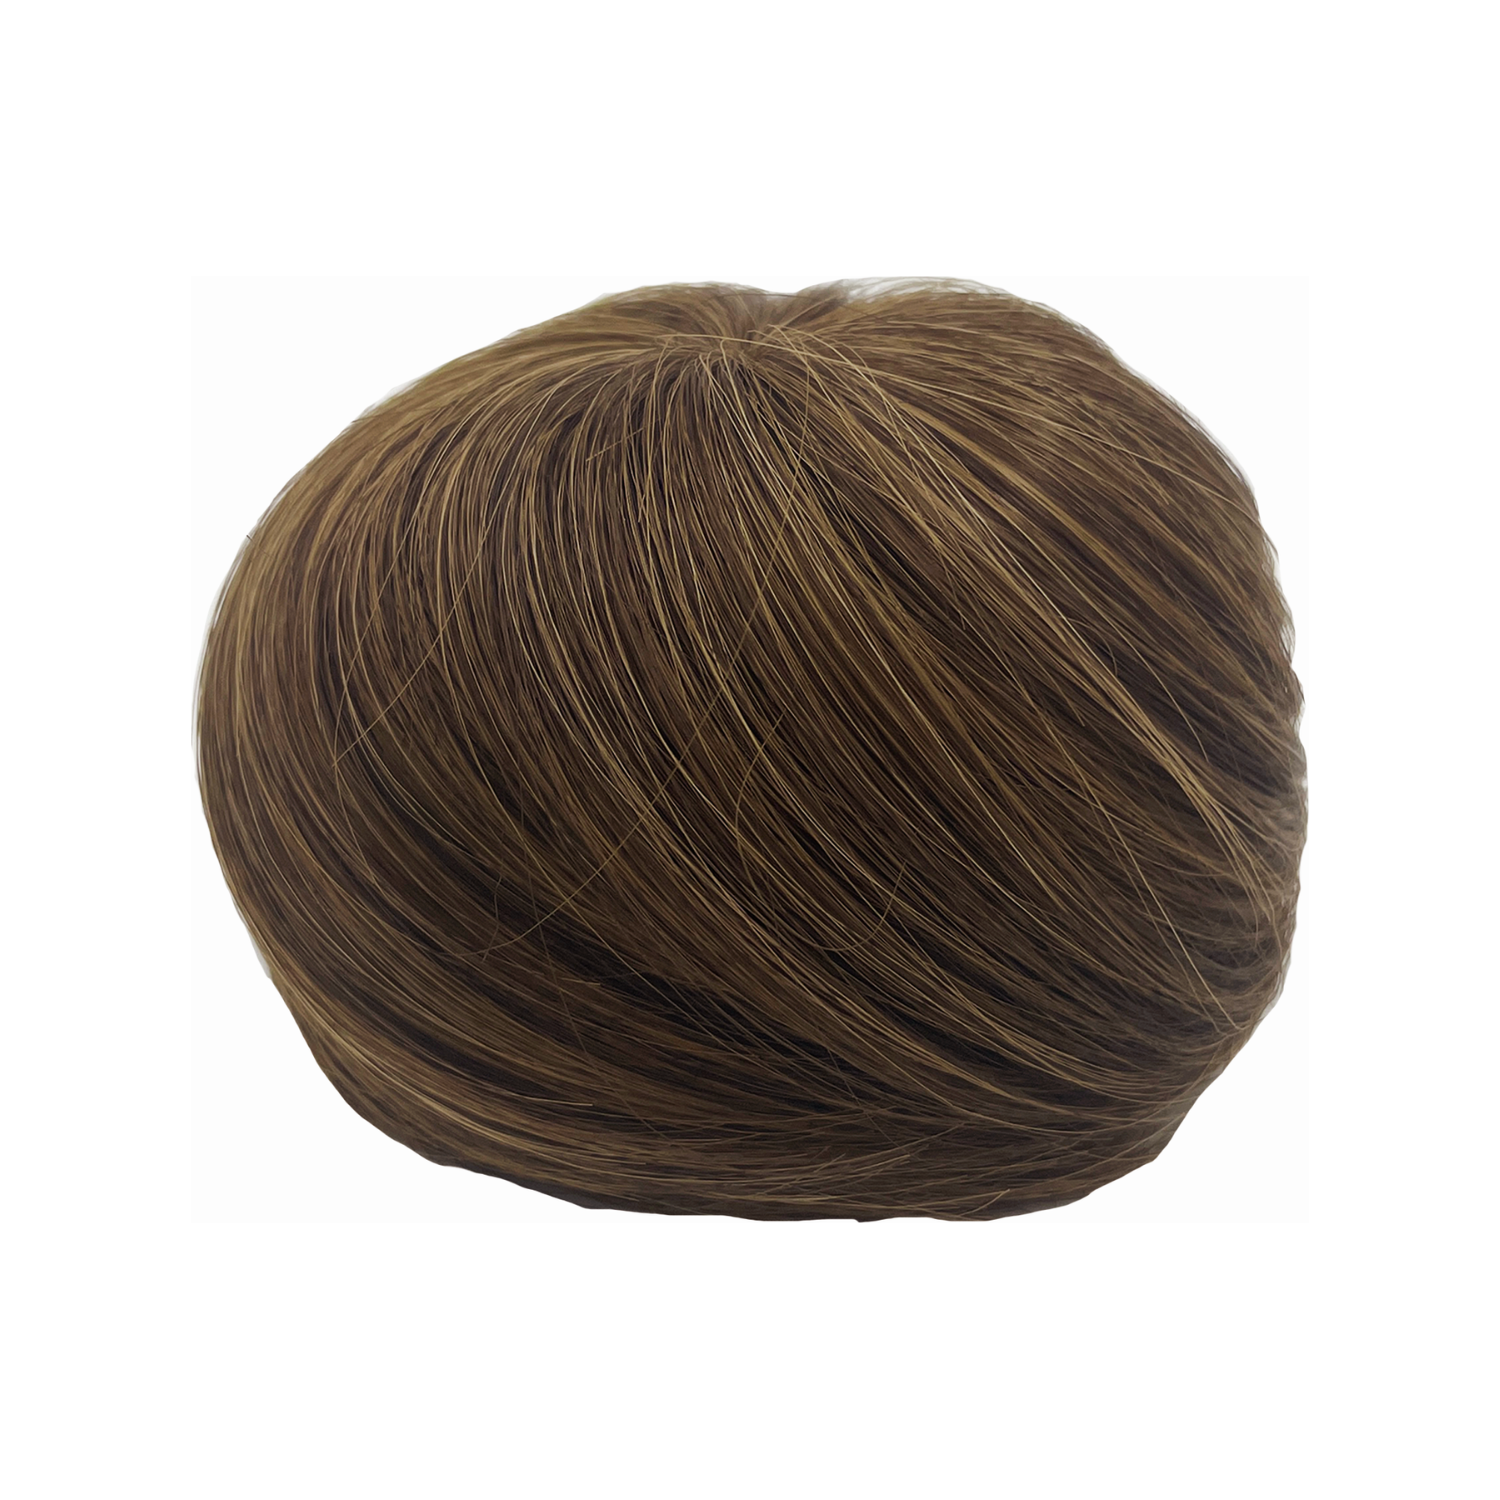 image of hair rehab london clip on bun hairpiece in shade chestnut